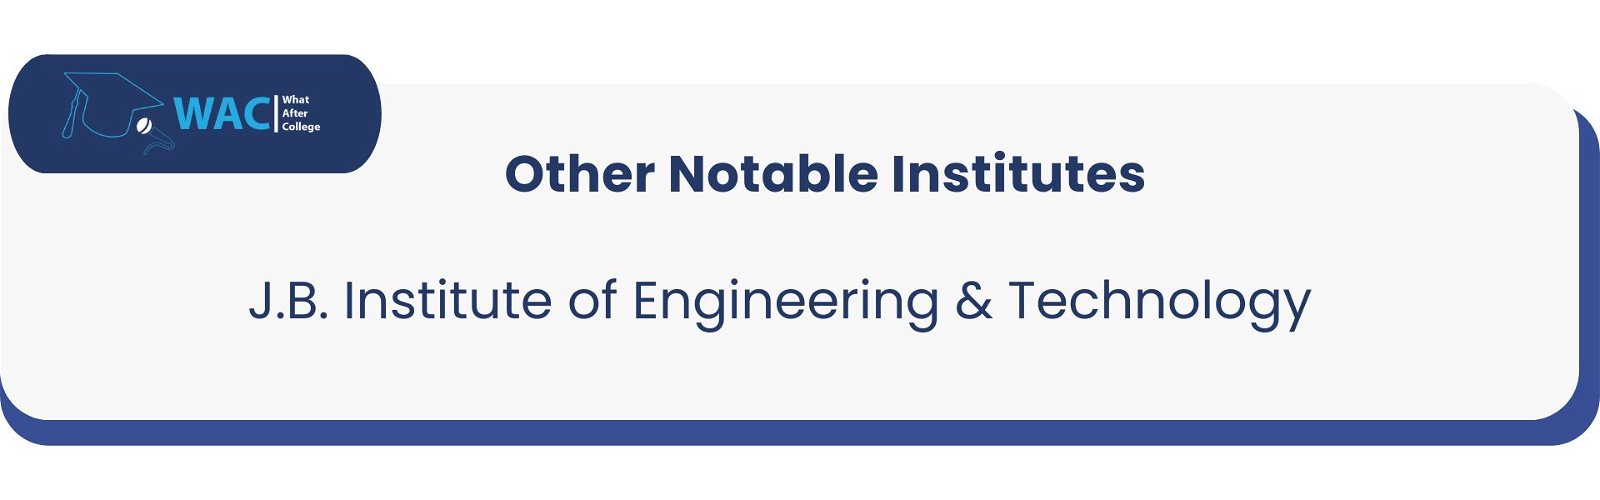 J.B. Institute of Engineering & Technology